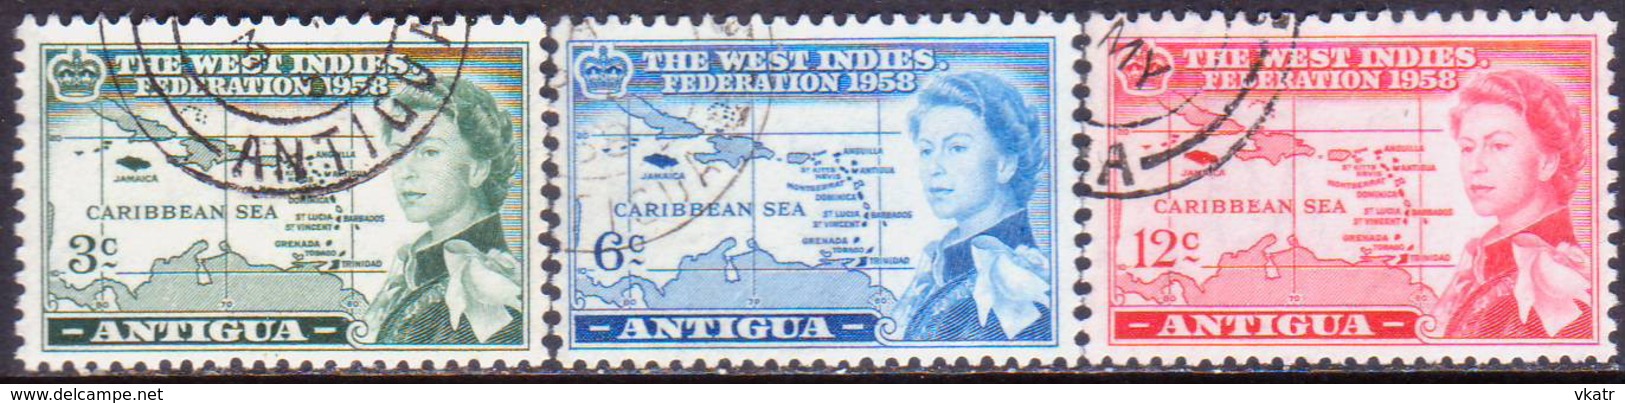 ANTIGUA 1958 SG #135-37 Compl.set Used Caribbean Federation - 1858-1960 Crown Colony